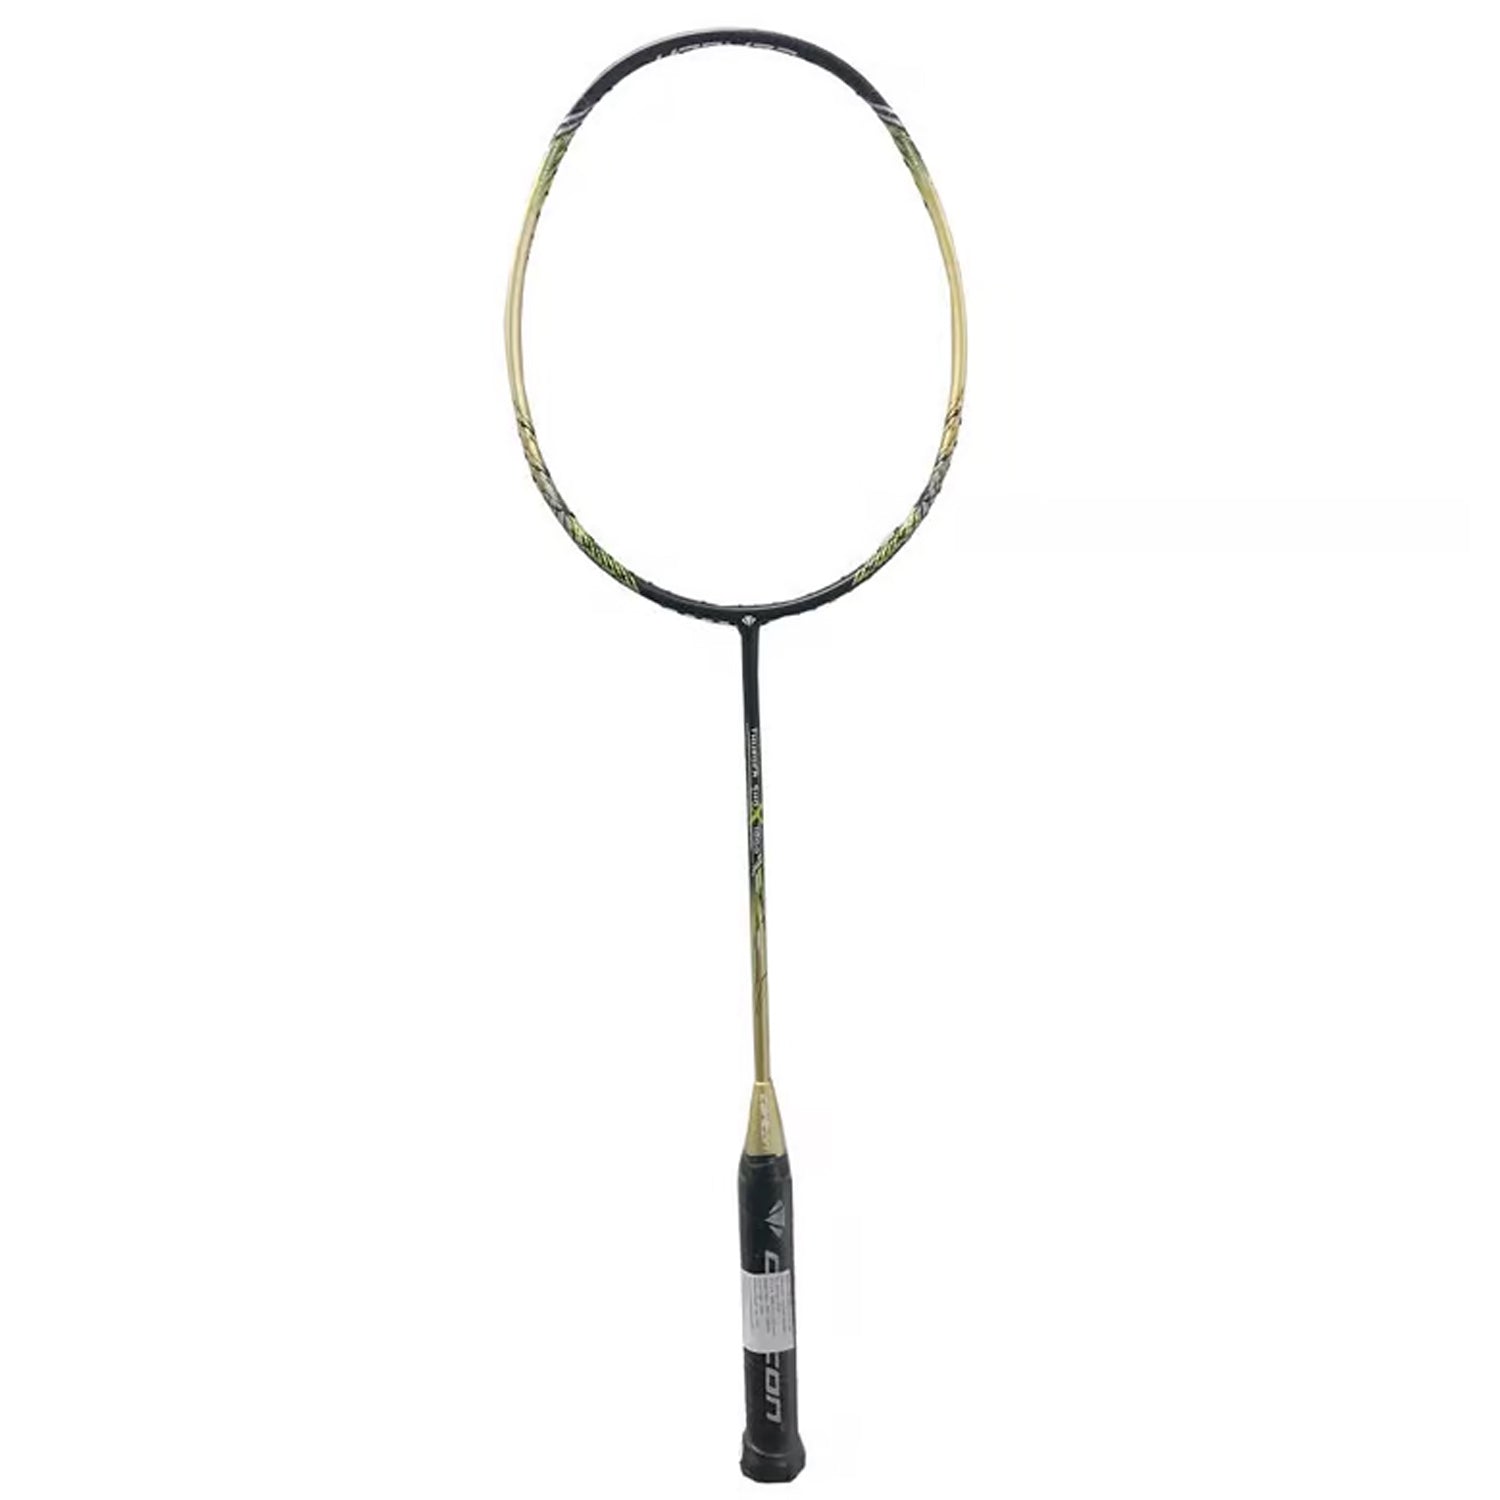 Carlton Thunder Shox 1000 Badminton Racquet, Gold - Best Price online Prokicksports.com